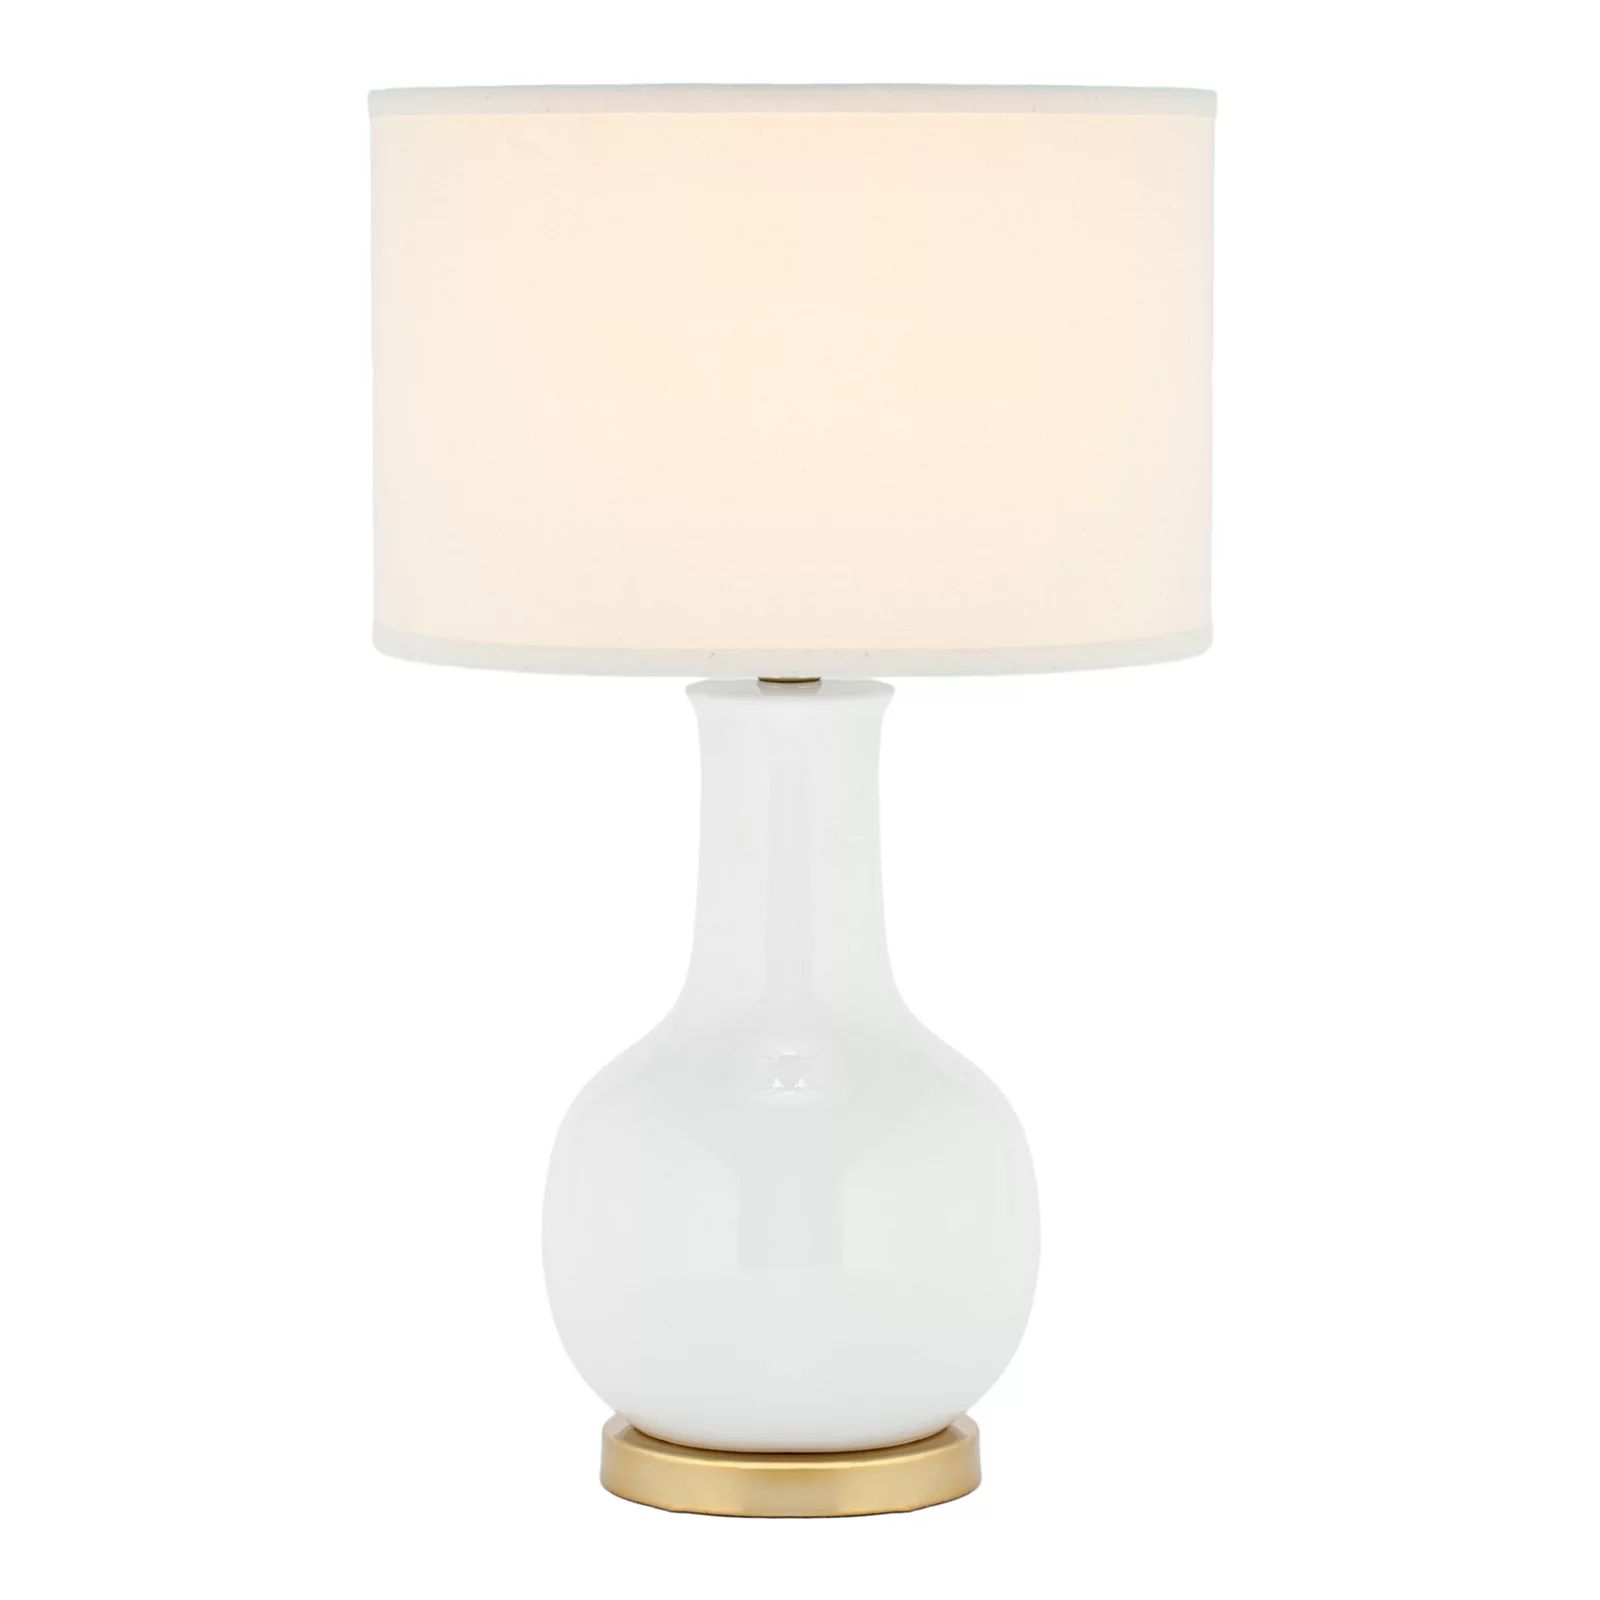 Safavieh Paris Table Lamp, White, Furniture | Kohl's